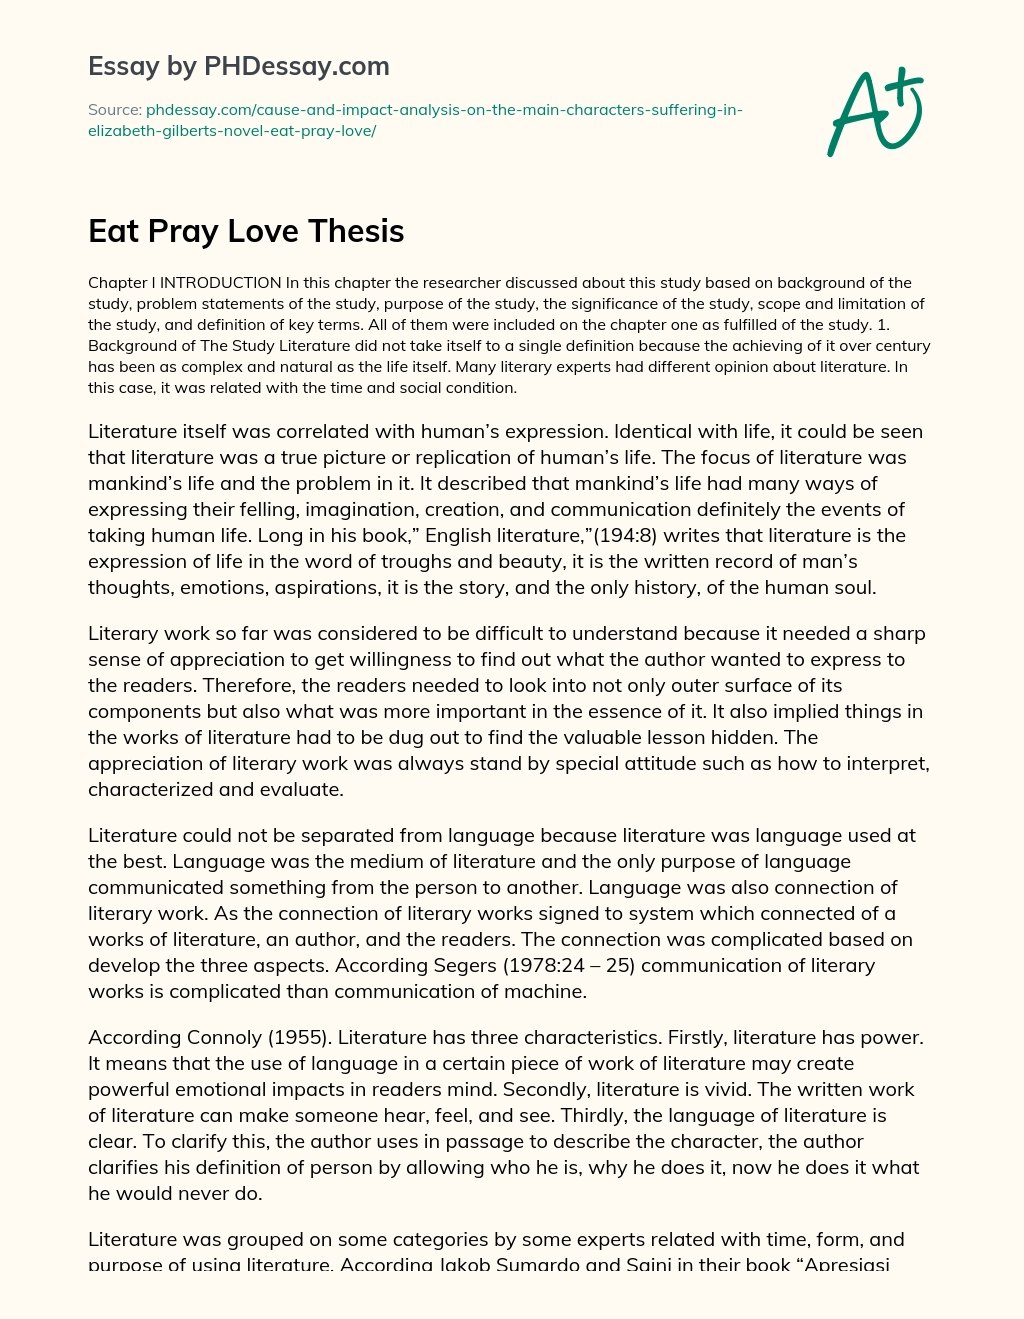 Eat Pray Love Thesis essay